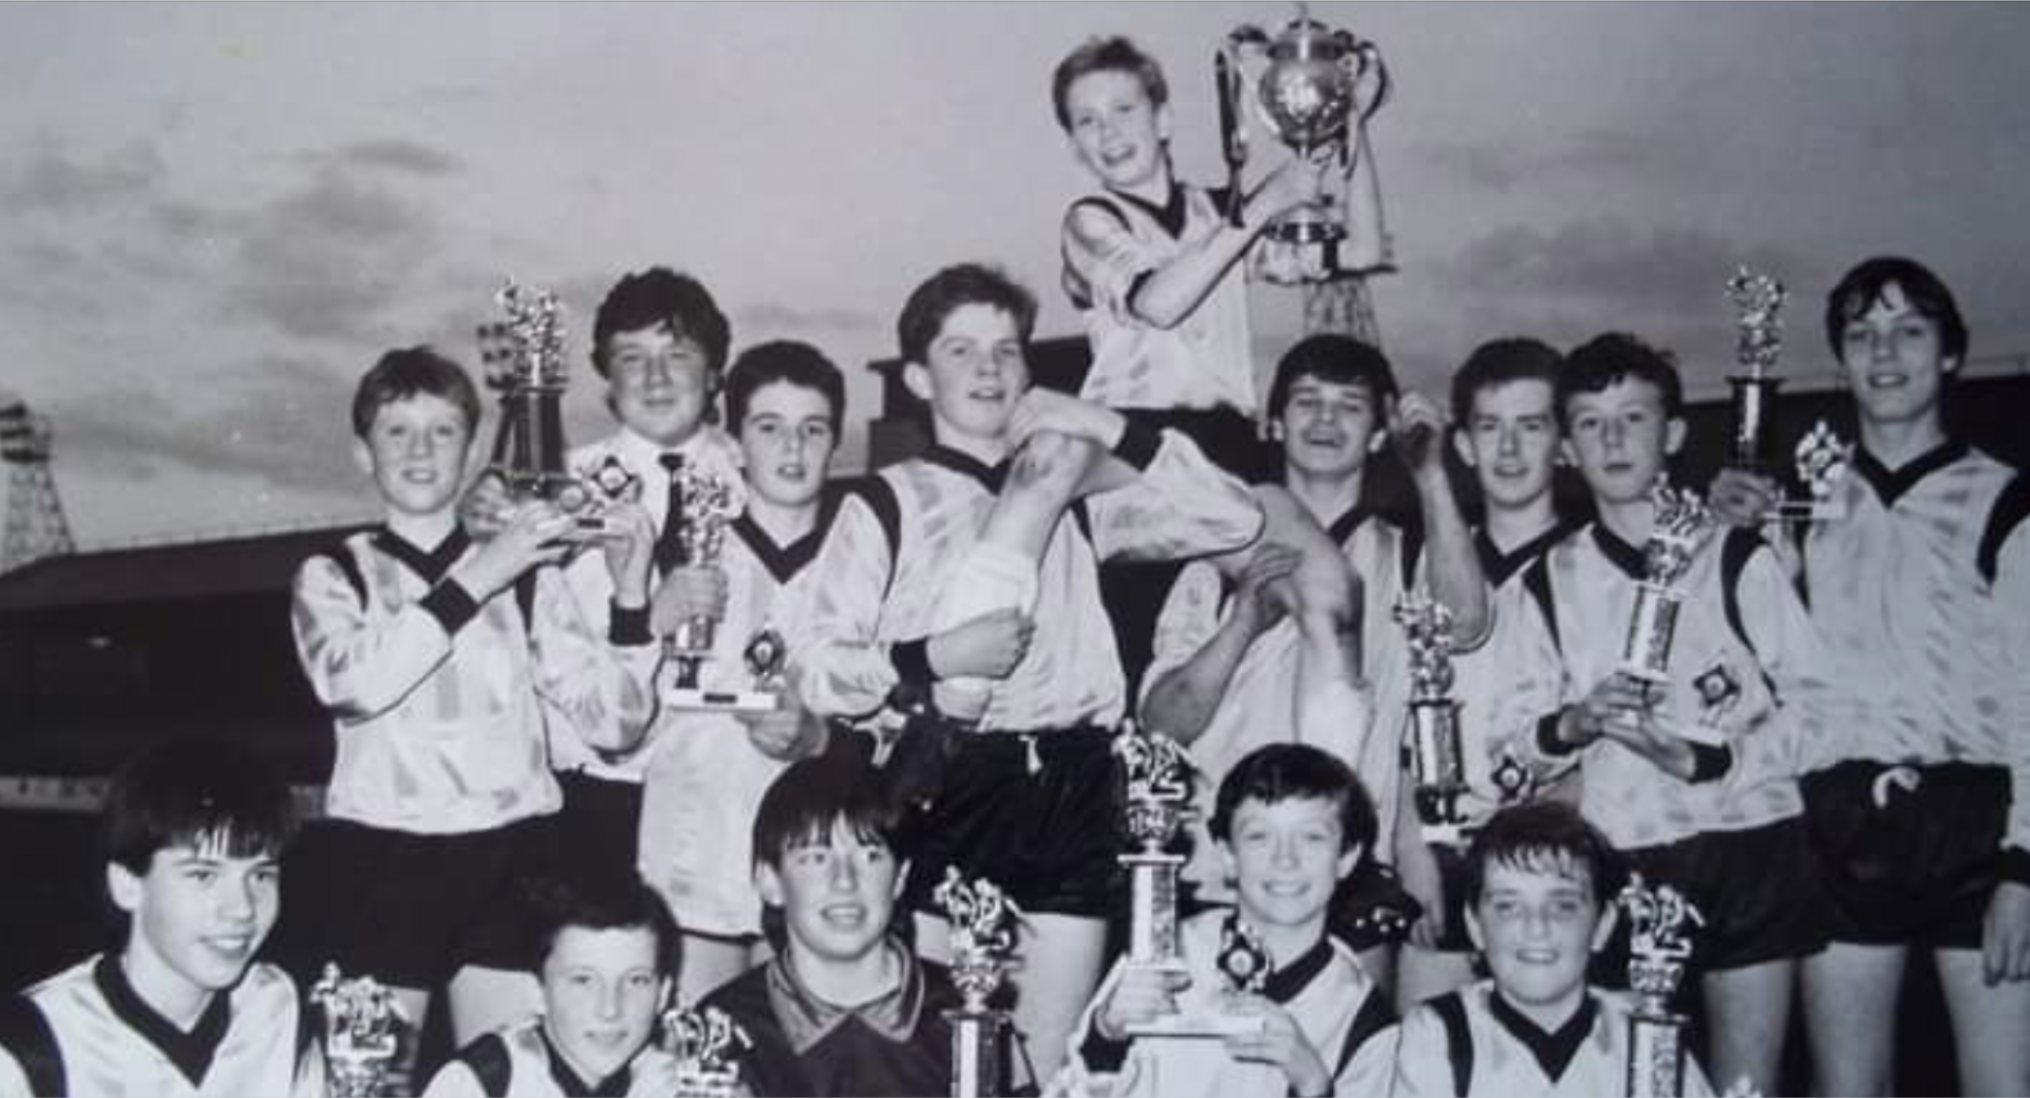 A photo of Derren's youth team in 1986